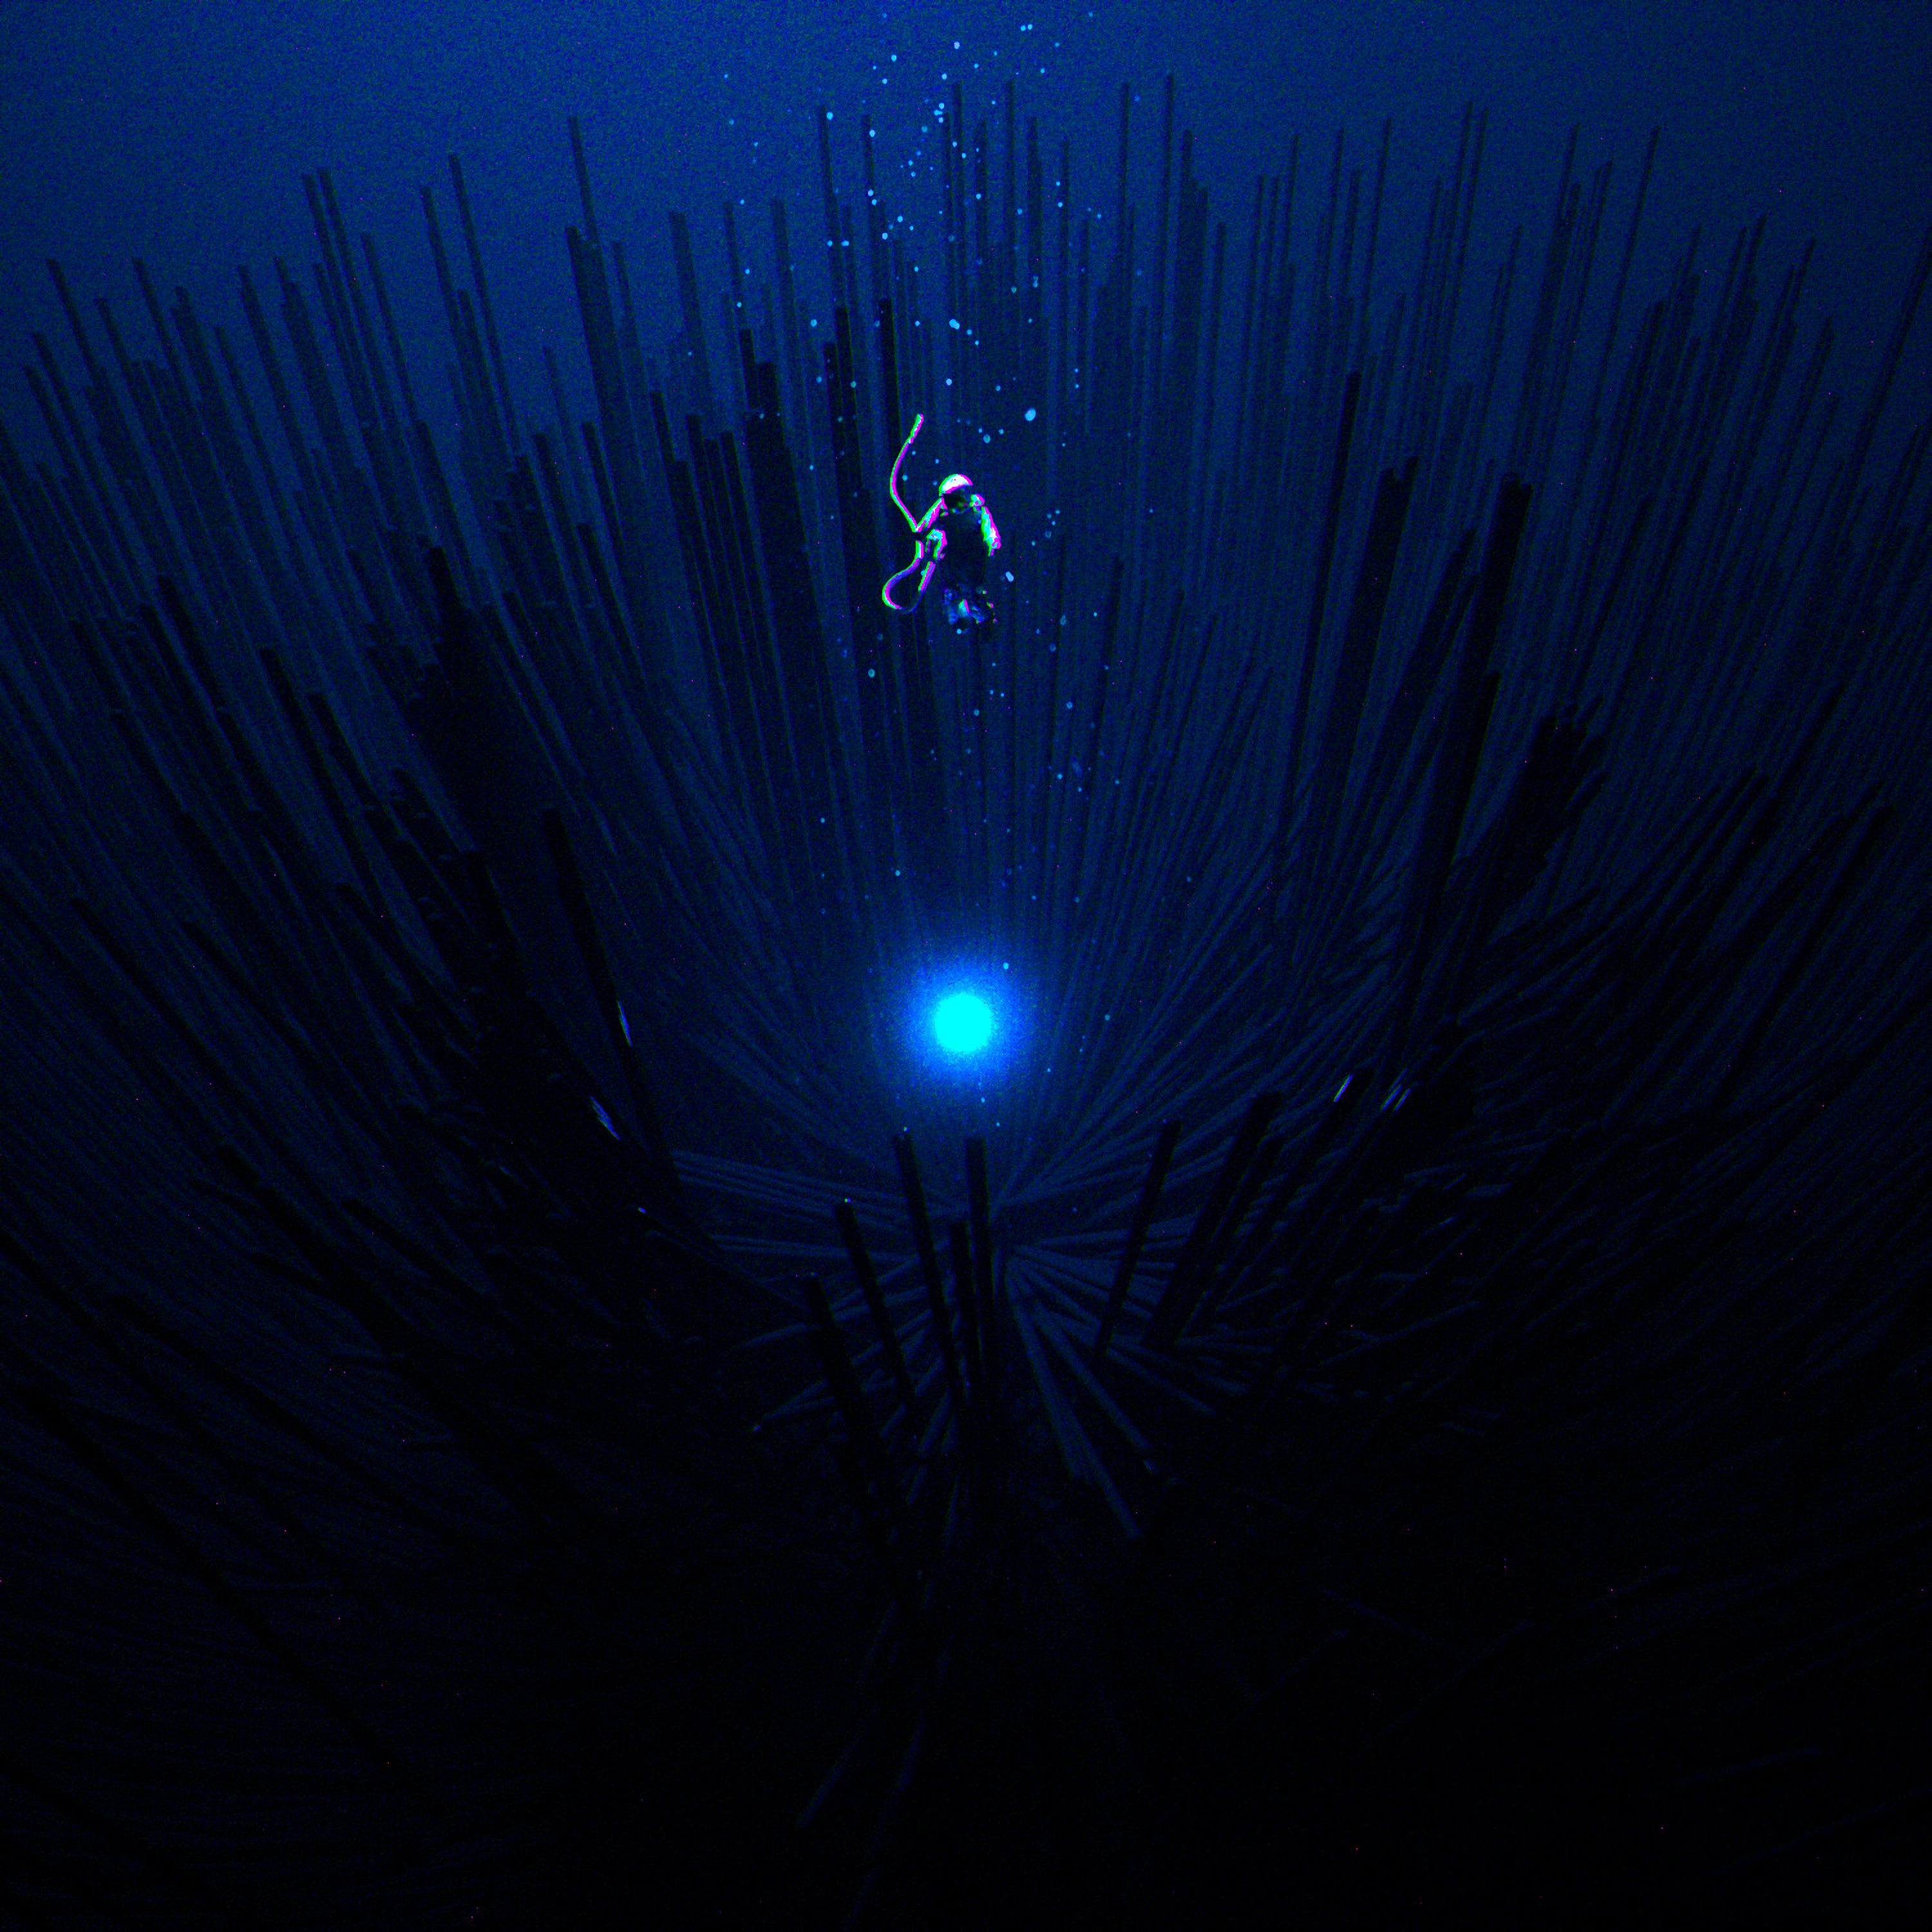 iPhone background shine, brilliance, scuba diver, space